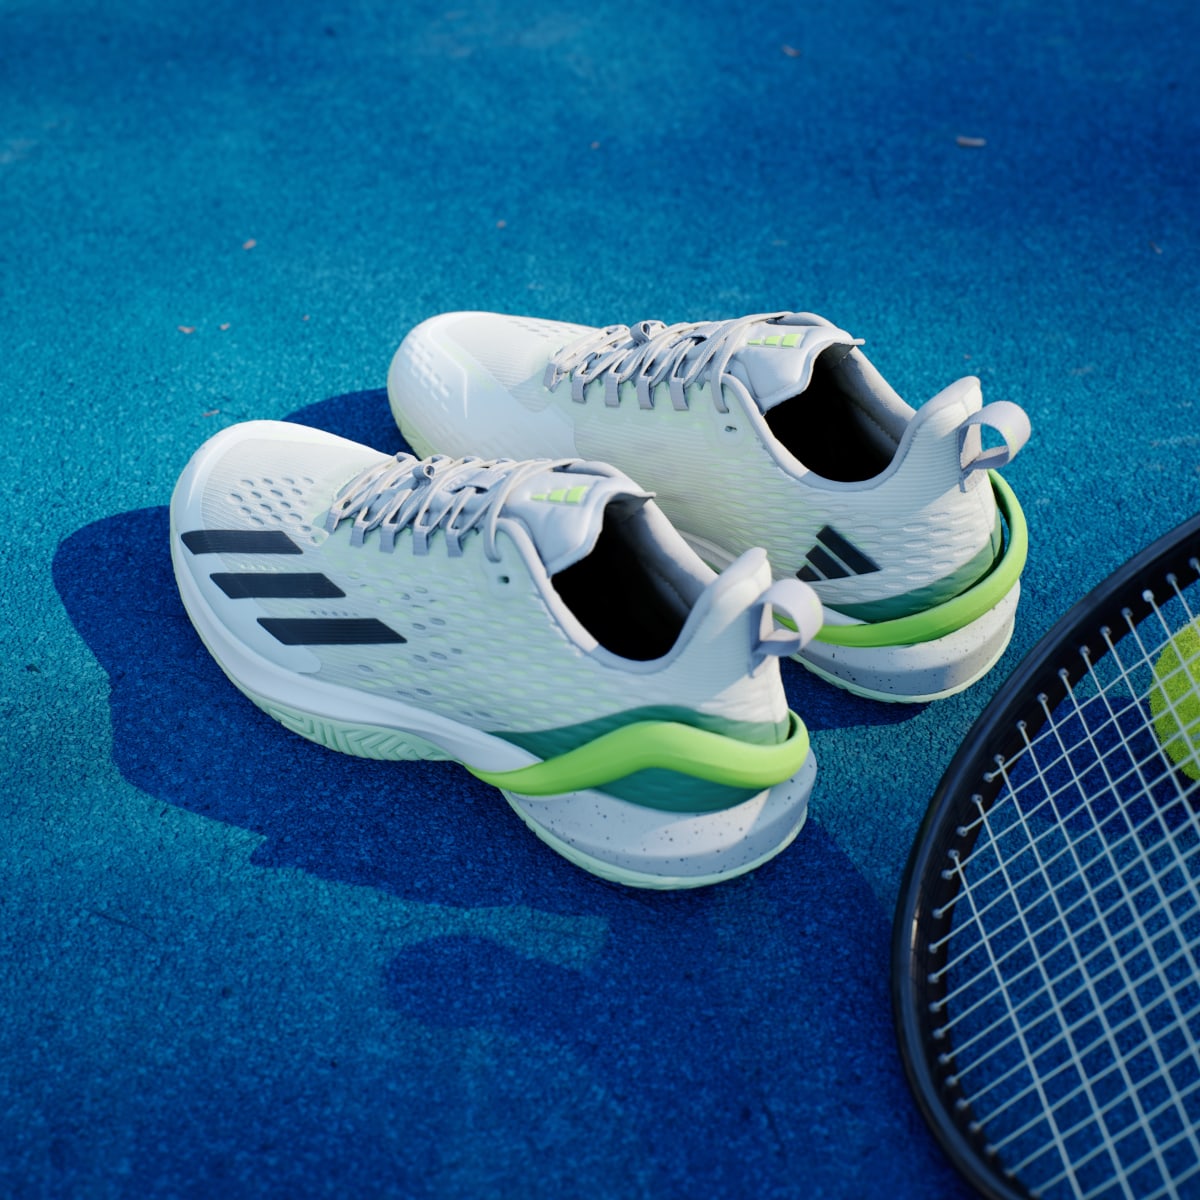 Adidas Tenis adizero Cybersonic para Tenis. 6